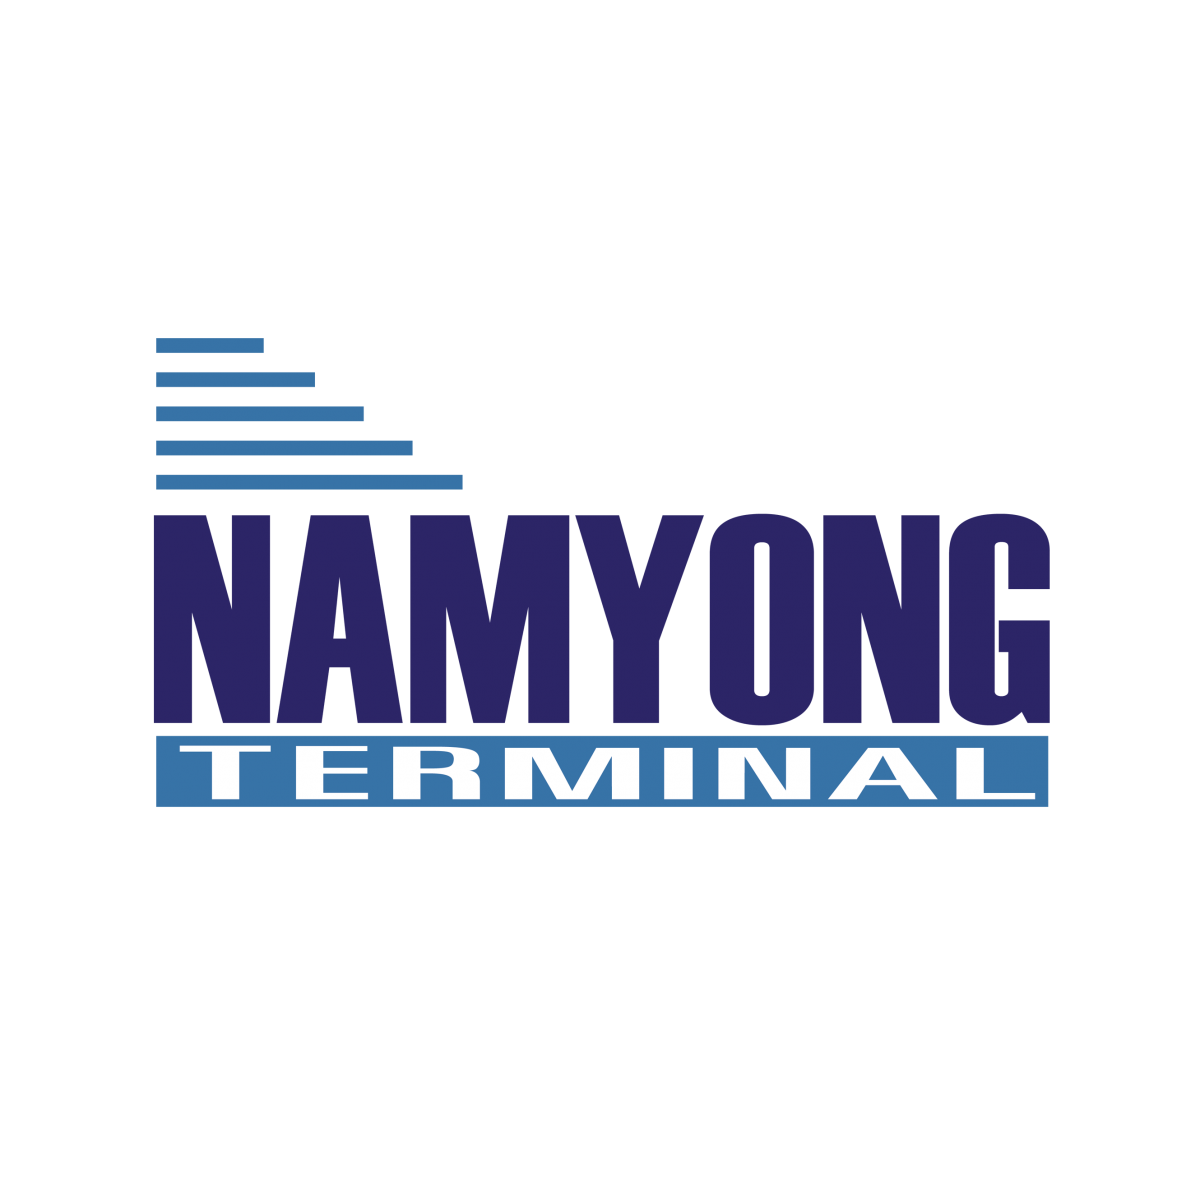 Namyong-Terminal-Public-1200x1183.png